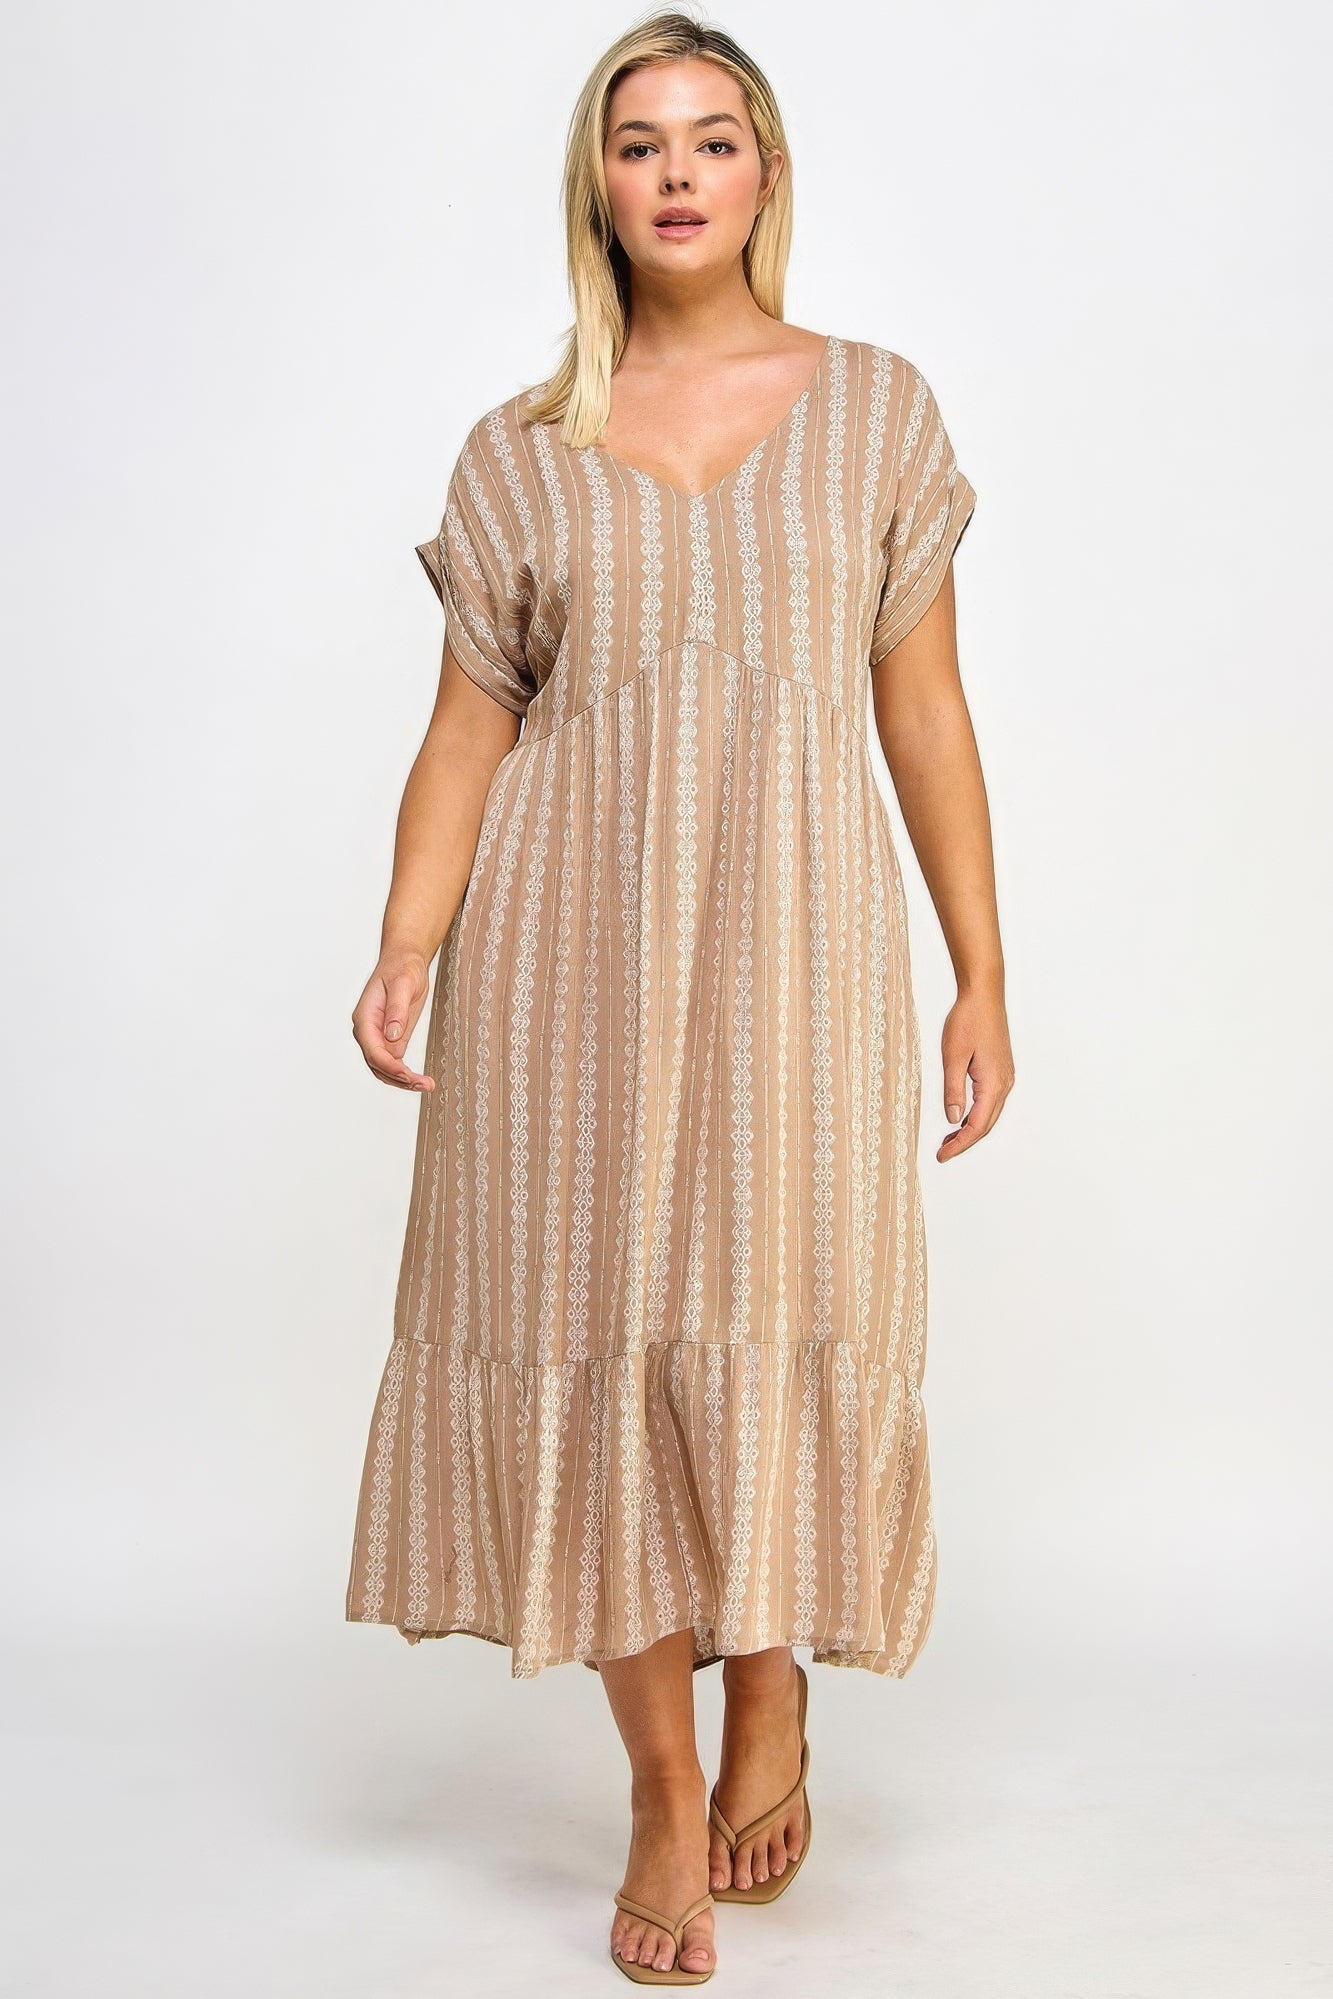 - Voluptuous (+) Boho Maxi Dress W/ Slip for Plus Size Women - womens plus size dress at TFC&H Co.